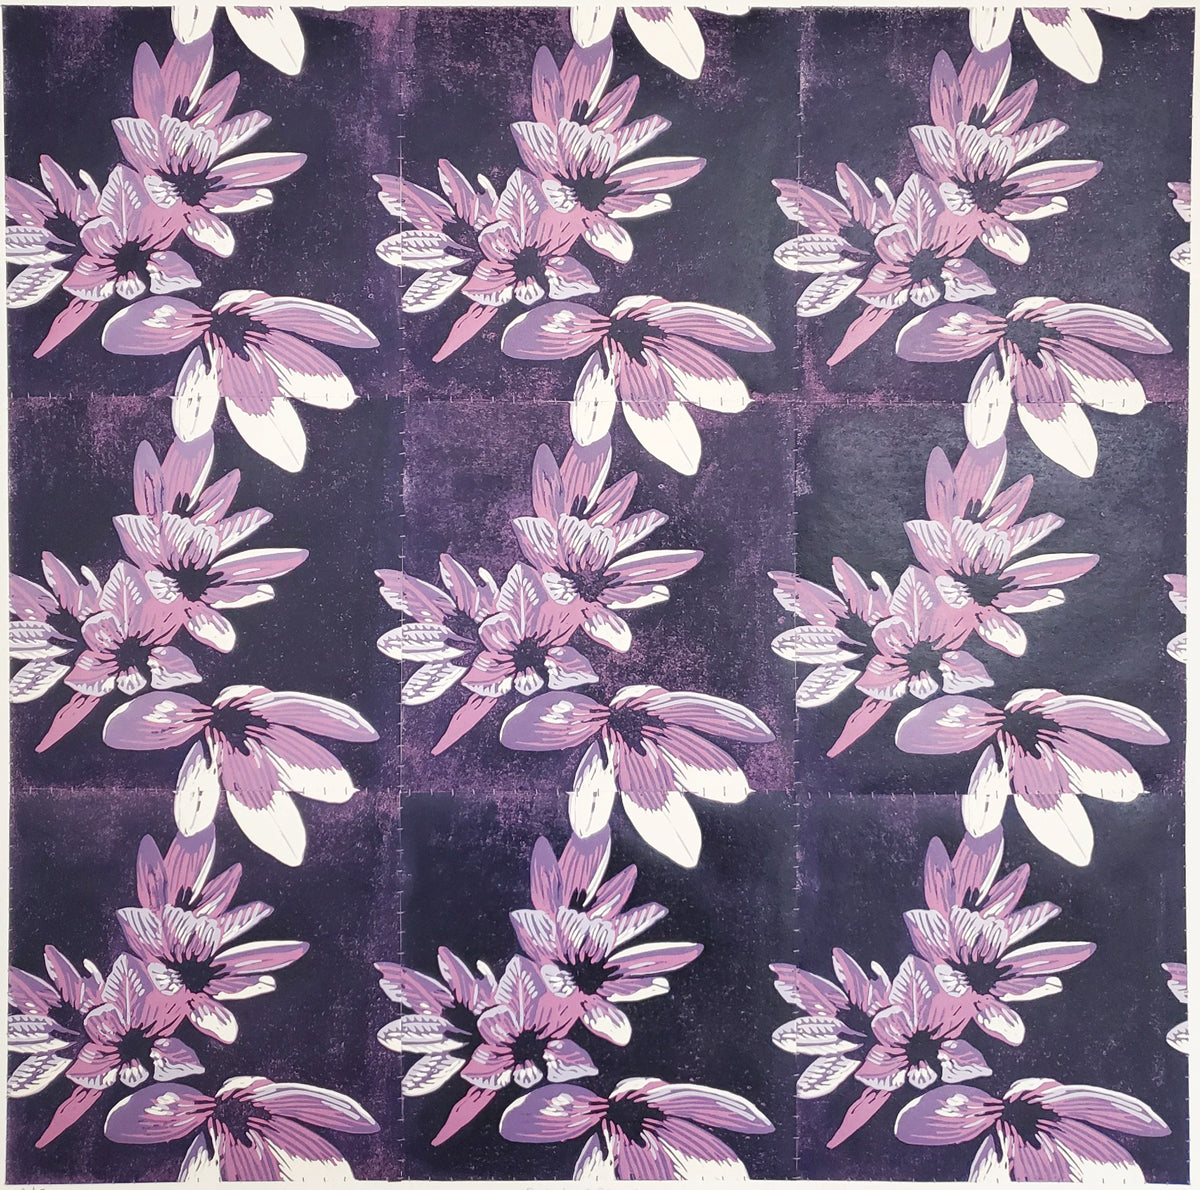 22. Purple Crocus (9 panel) (unframed)